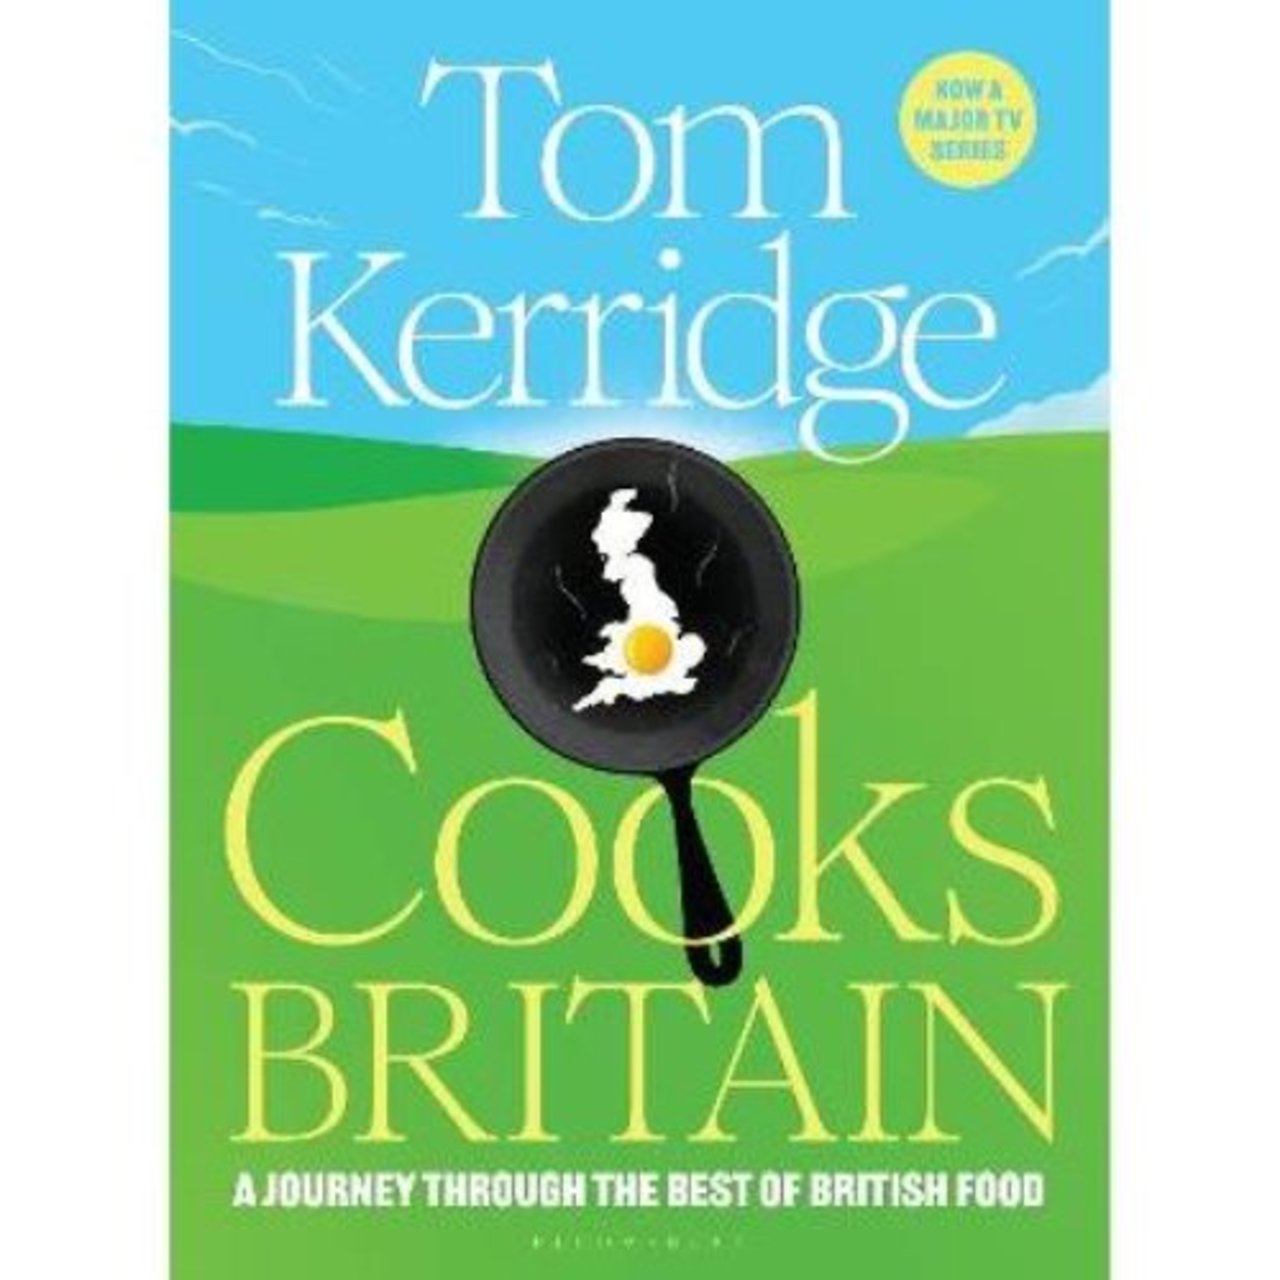 Hardback Tom Kerridge Cooks Britain by Tom Kerridge